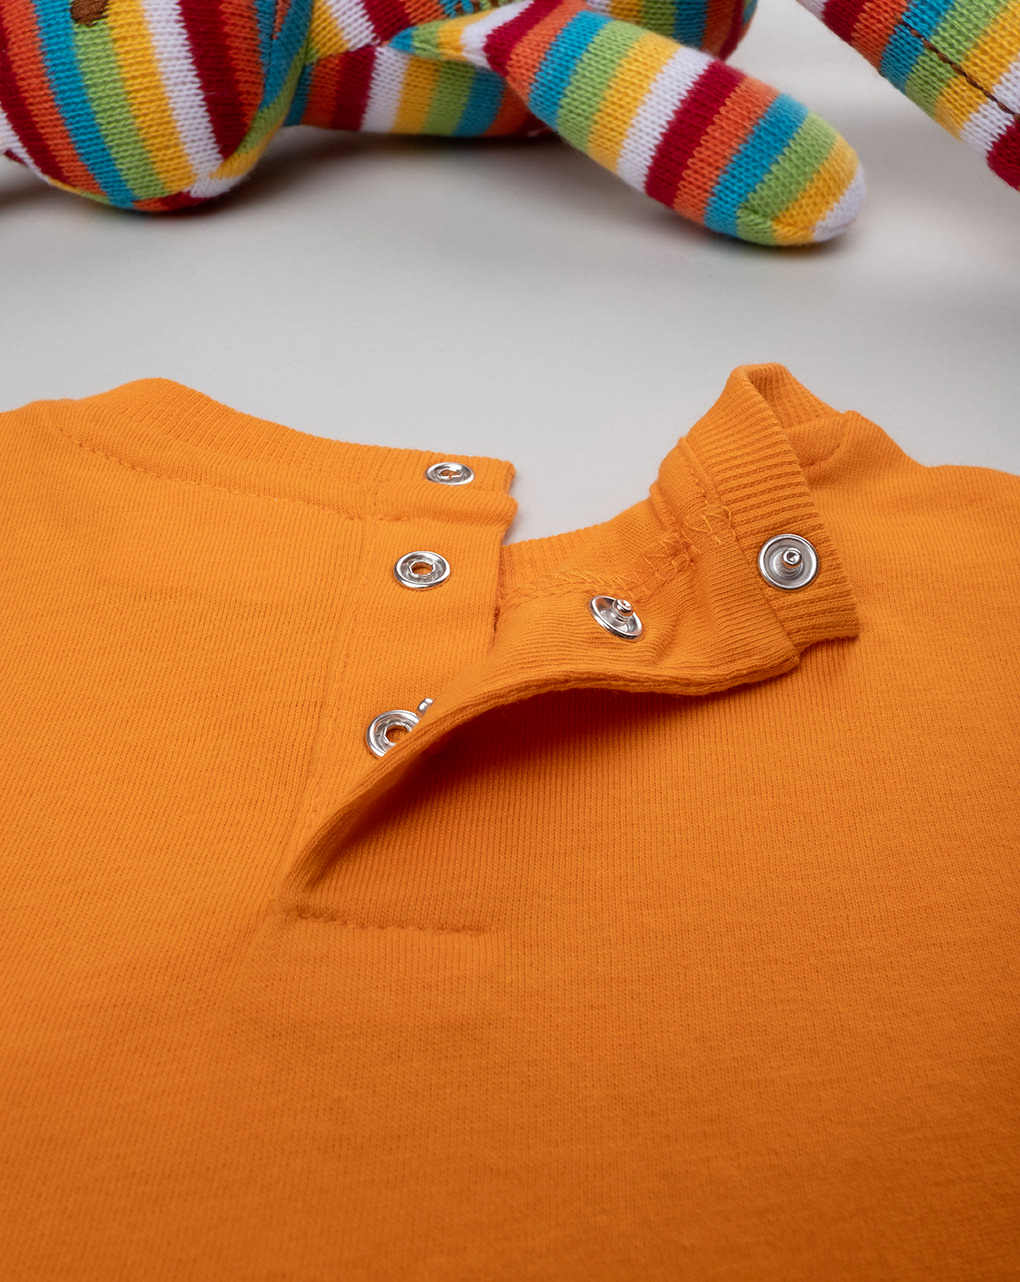 Camiseta niño "sport" naranja - Prénatal